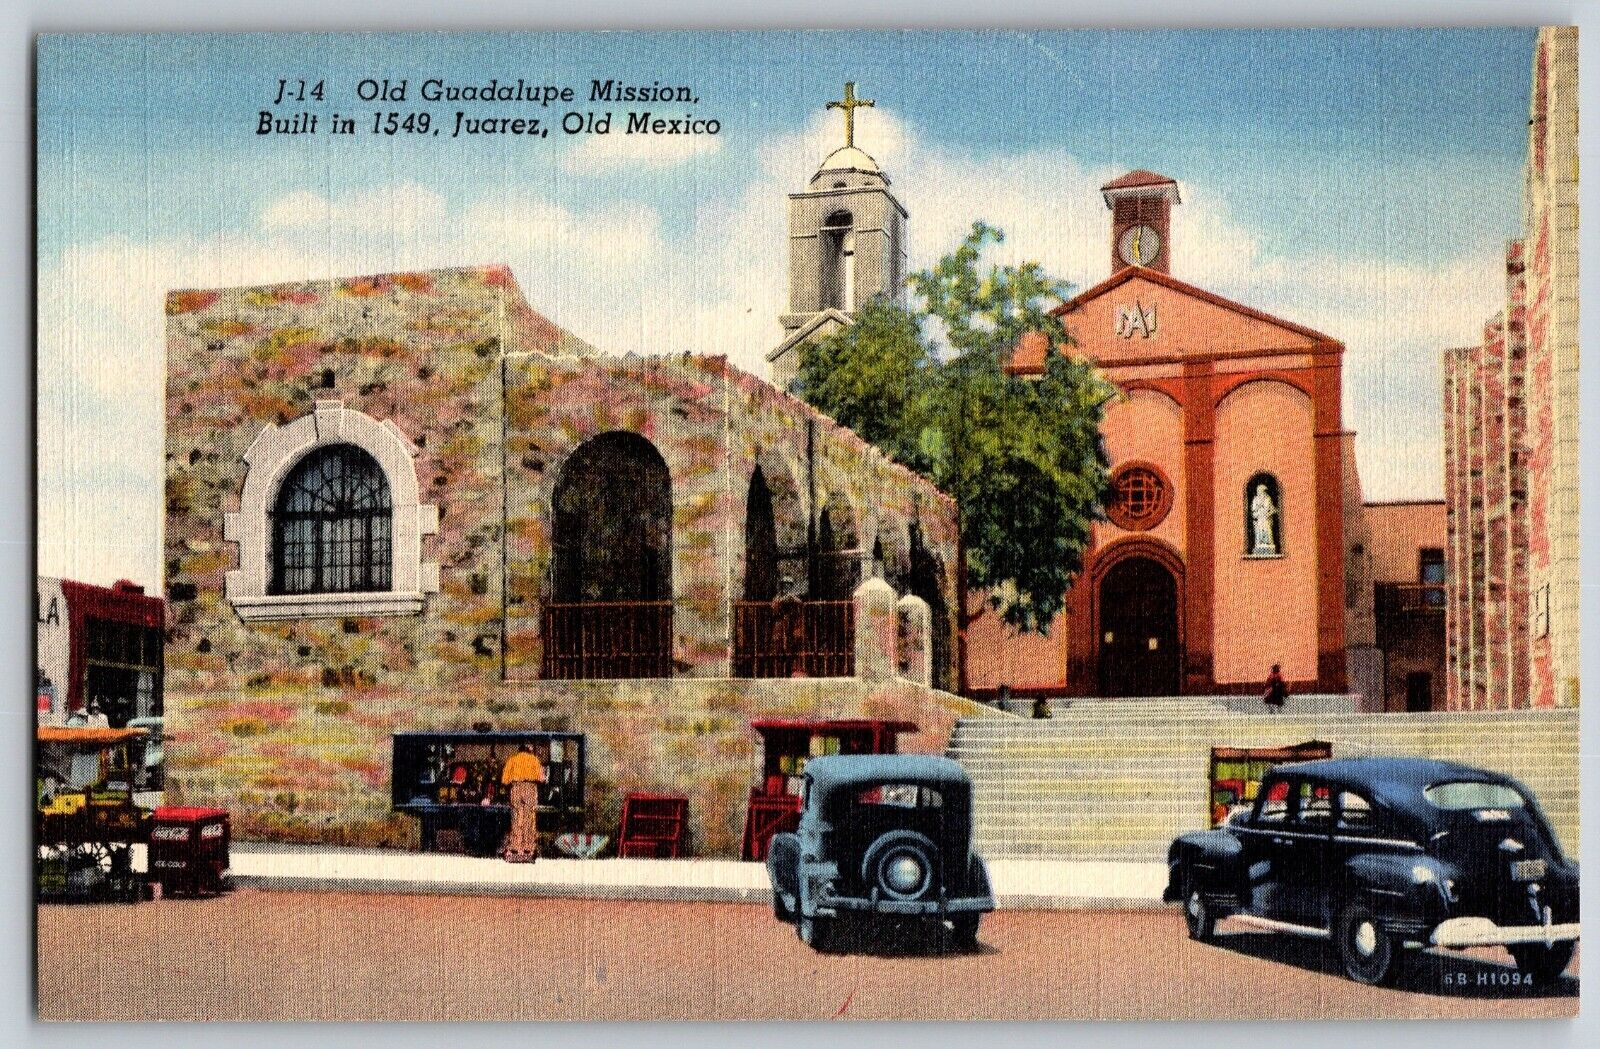 C, Juarez, Old Mexico - Old Guadalupe Mission Built in 1549 - Vintage Postcard